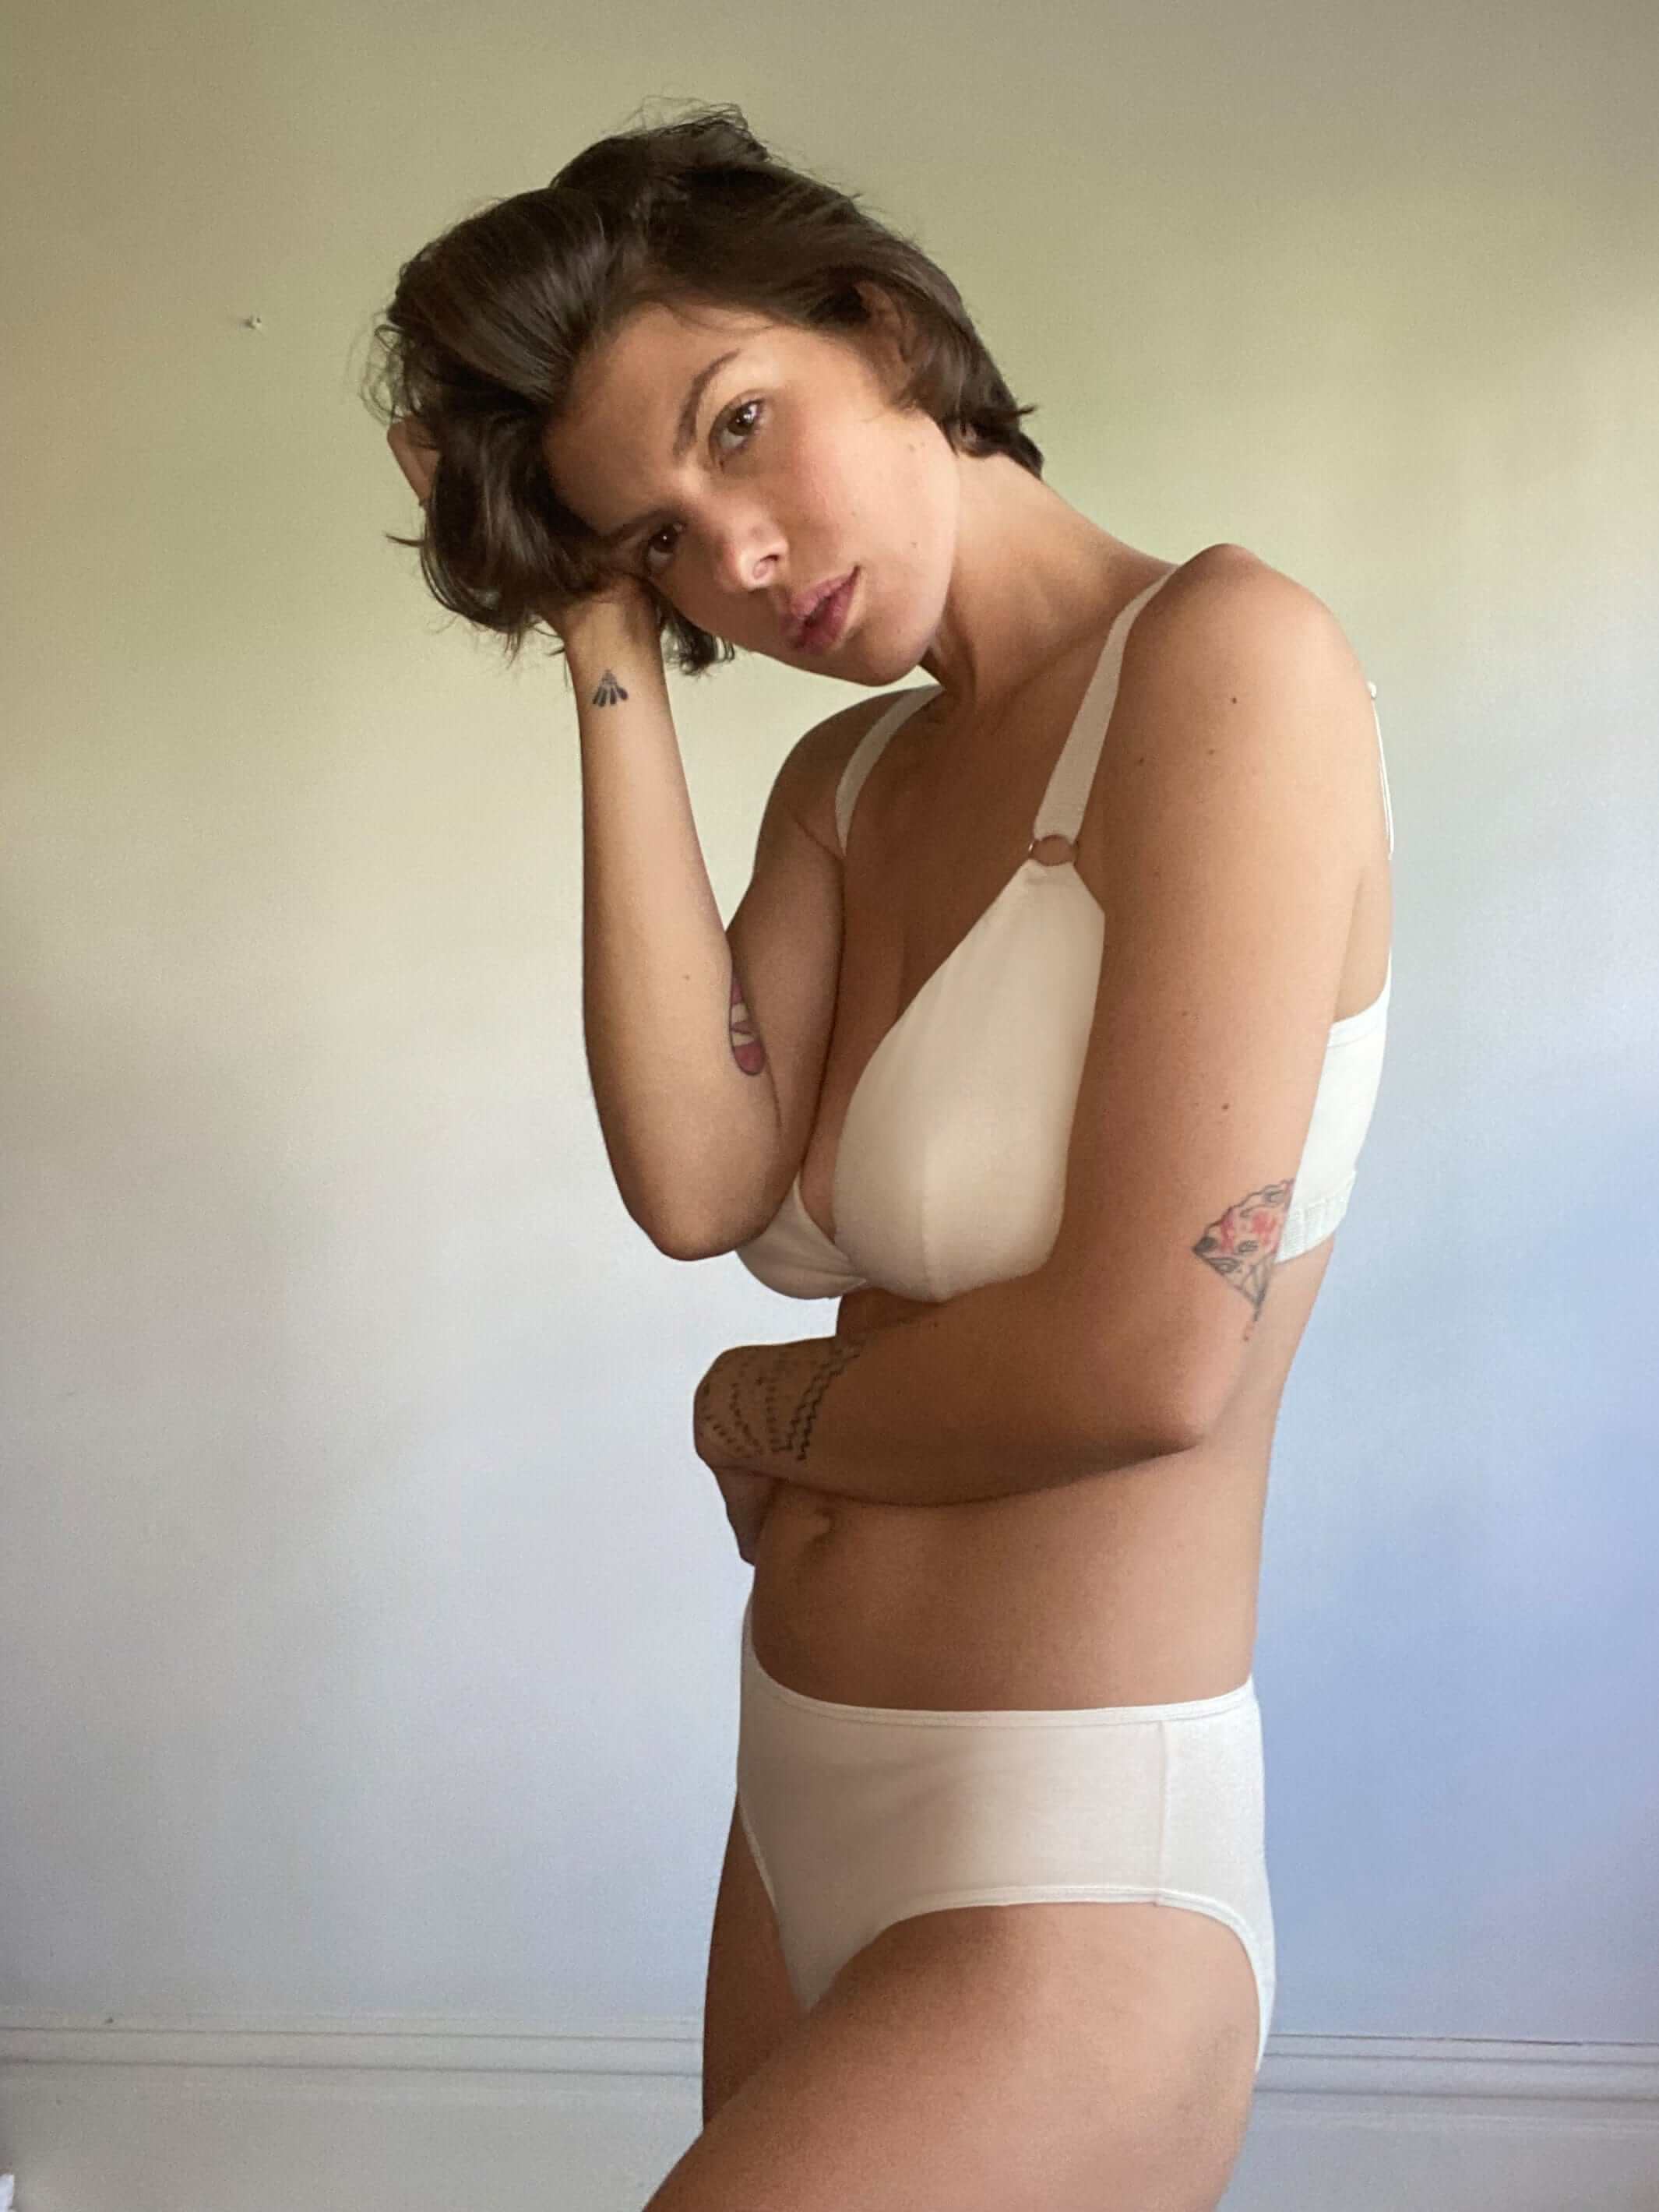 woman wearing an organic cotton nursing bra and matching organic cotton underwear